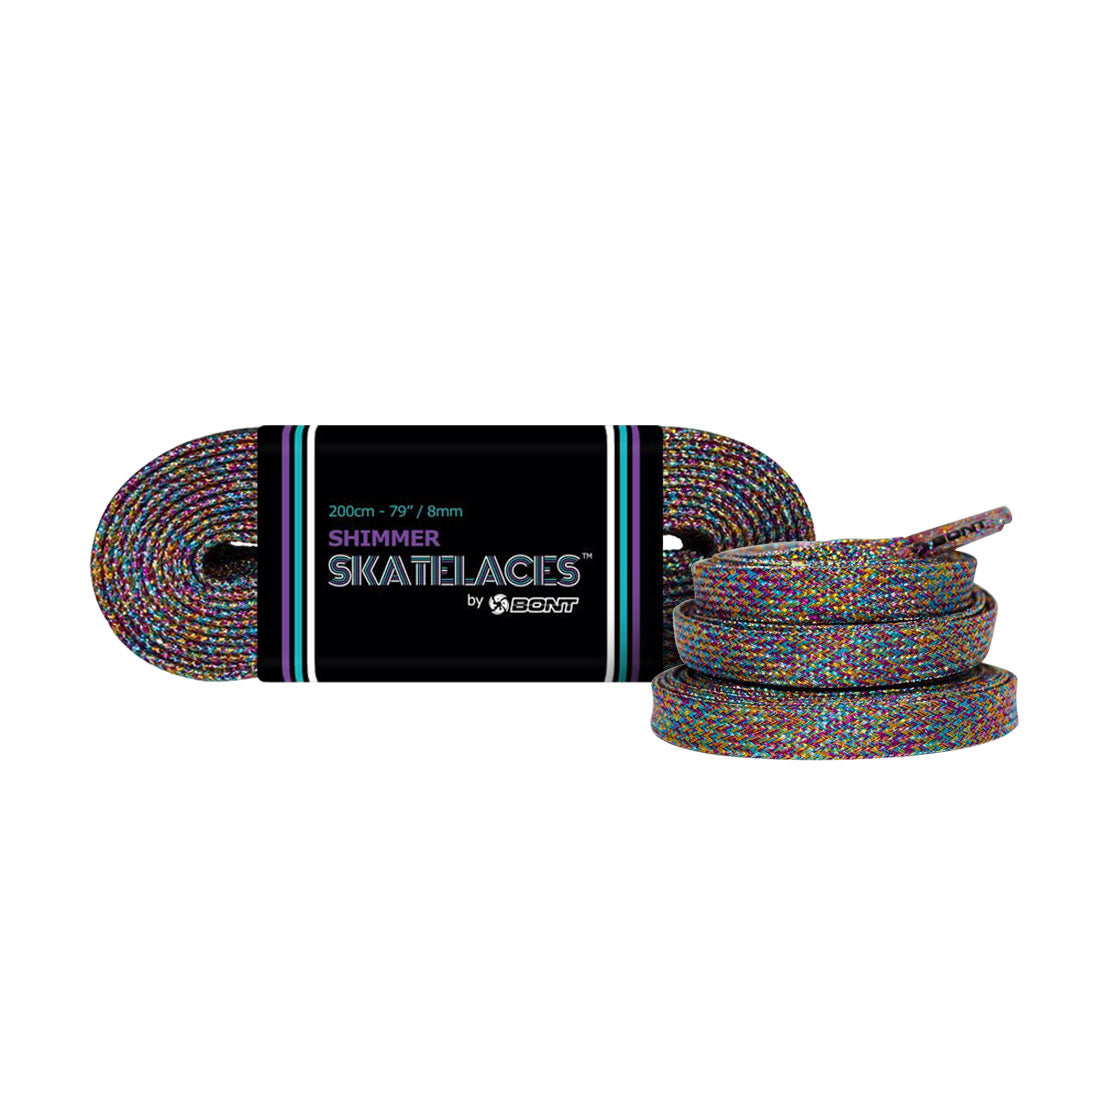 Bont Shimmer 8mm Laces - 200cm/79in Unicorn Rainbow Laces